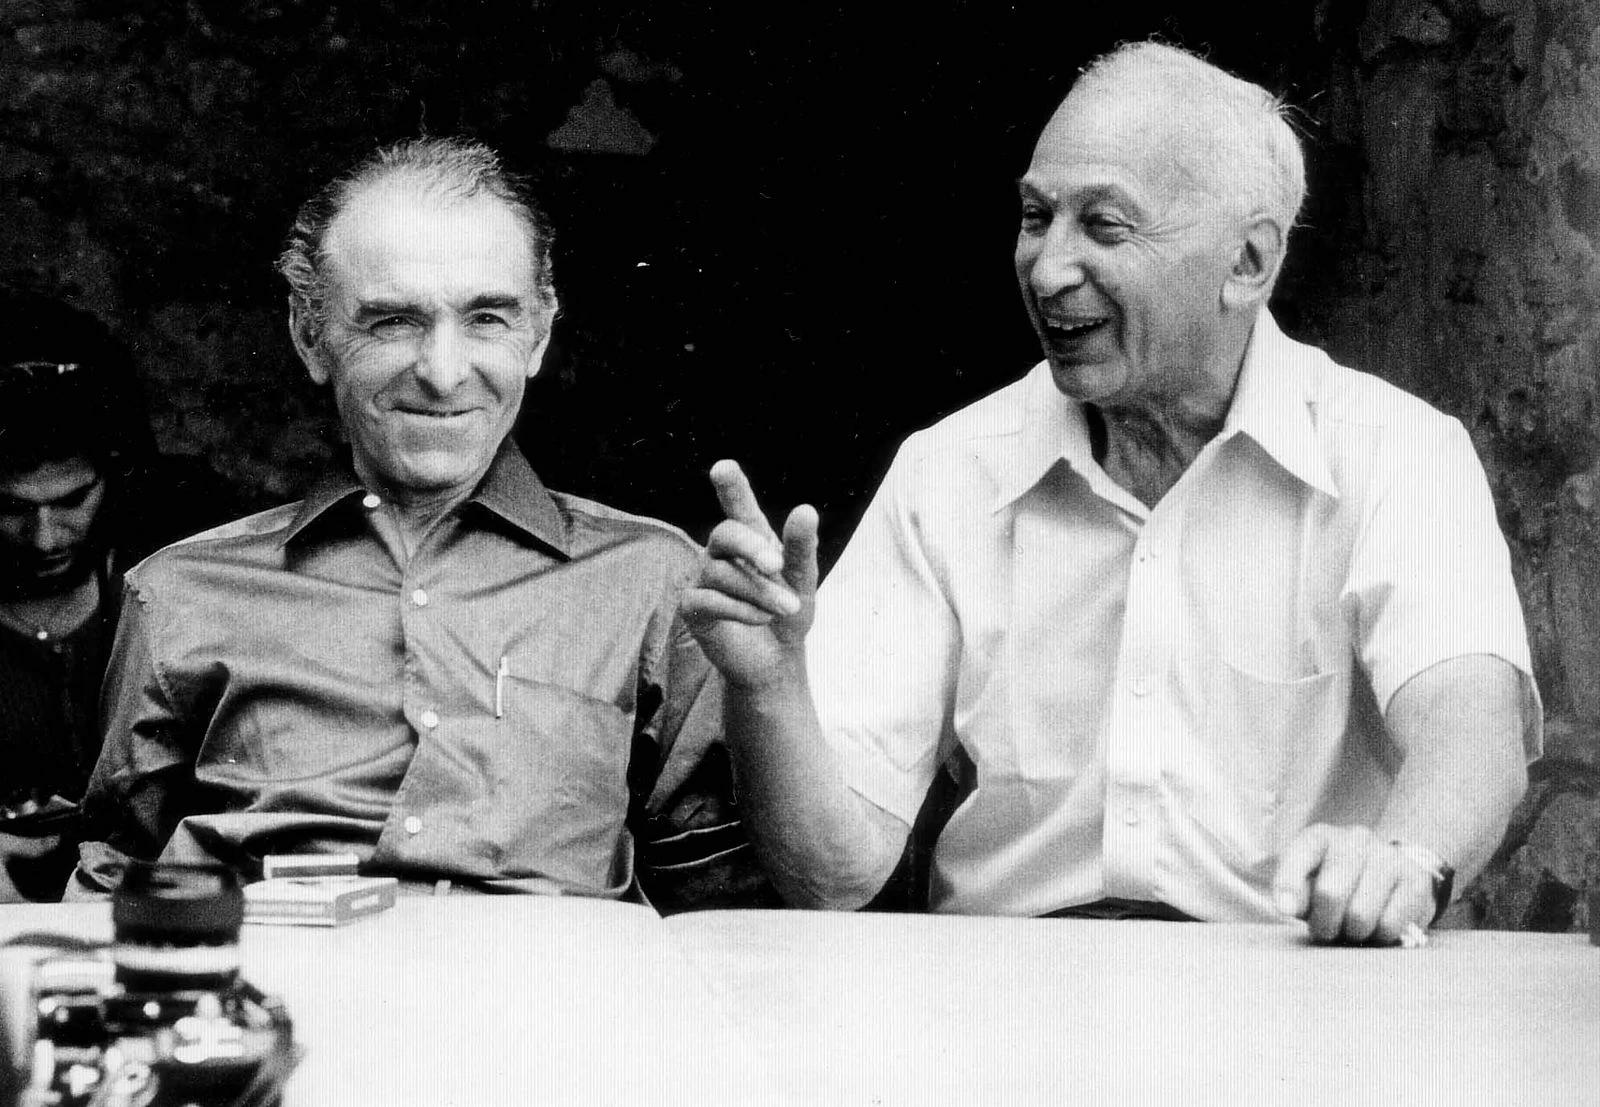 Photographers Robert Doisneau (left) and André Kertész (right) (1975).